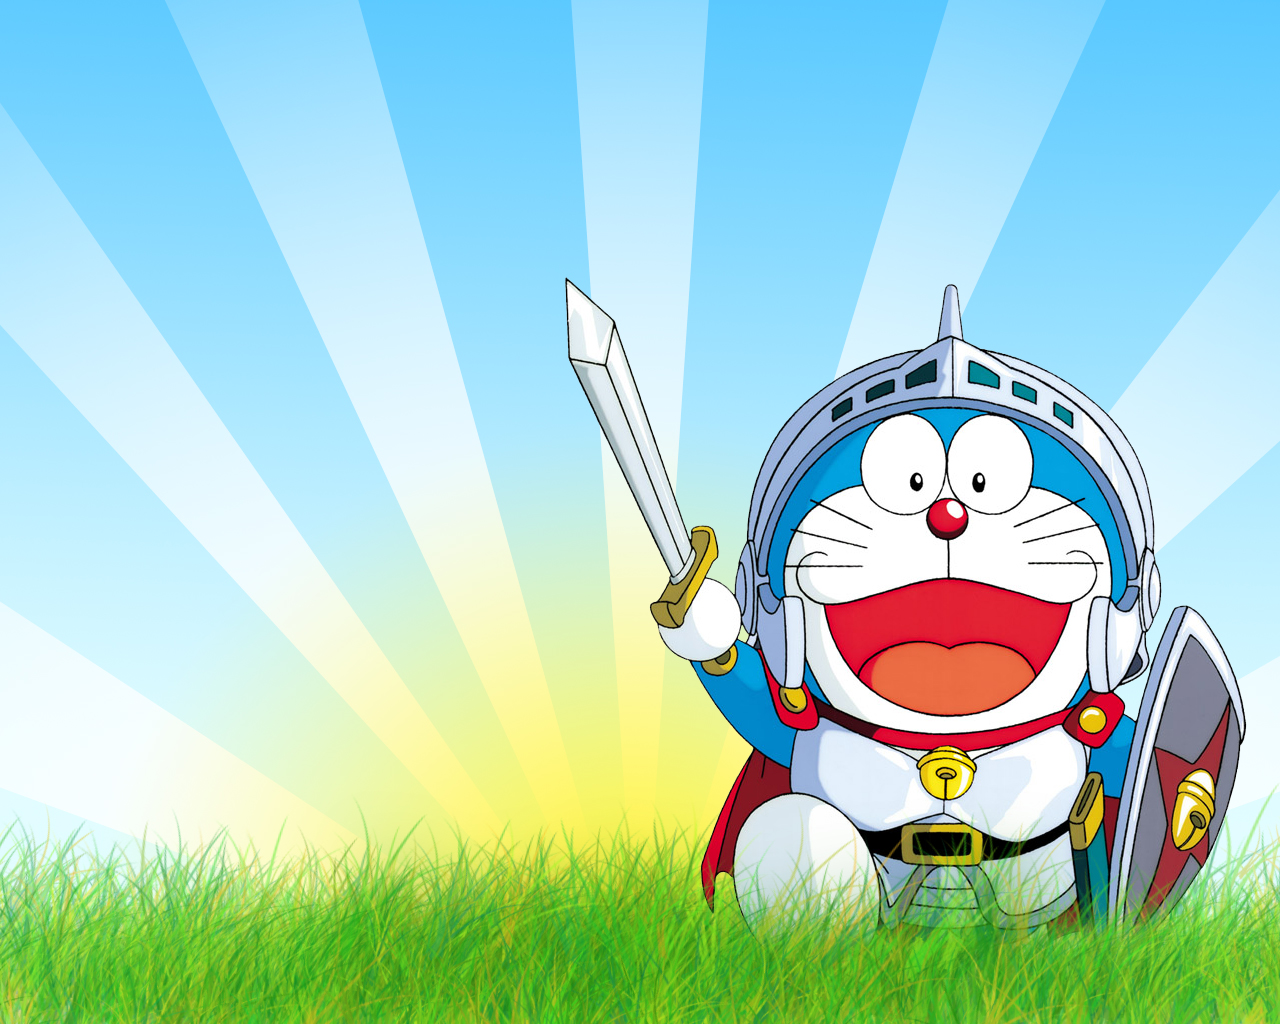 Download this Doraemon picture